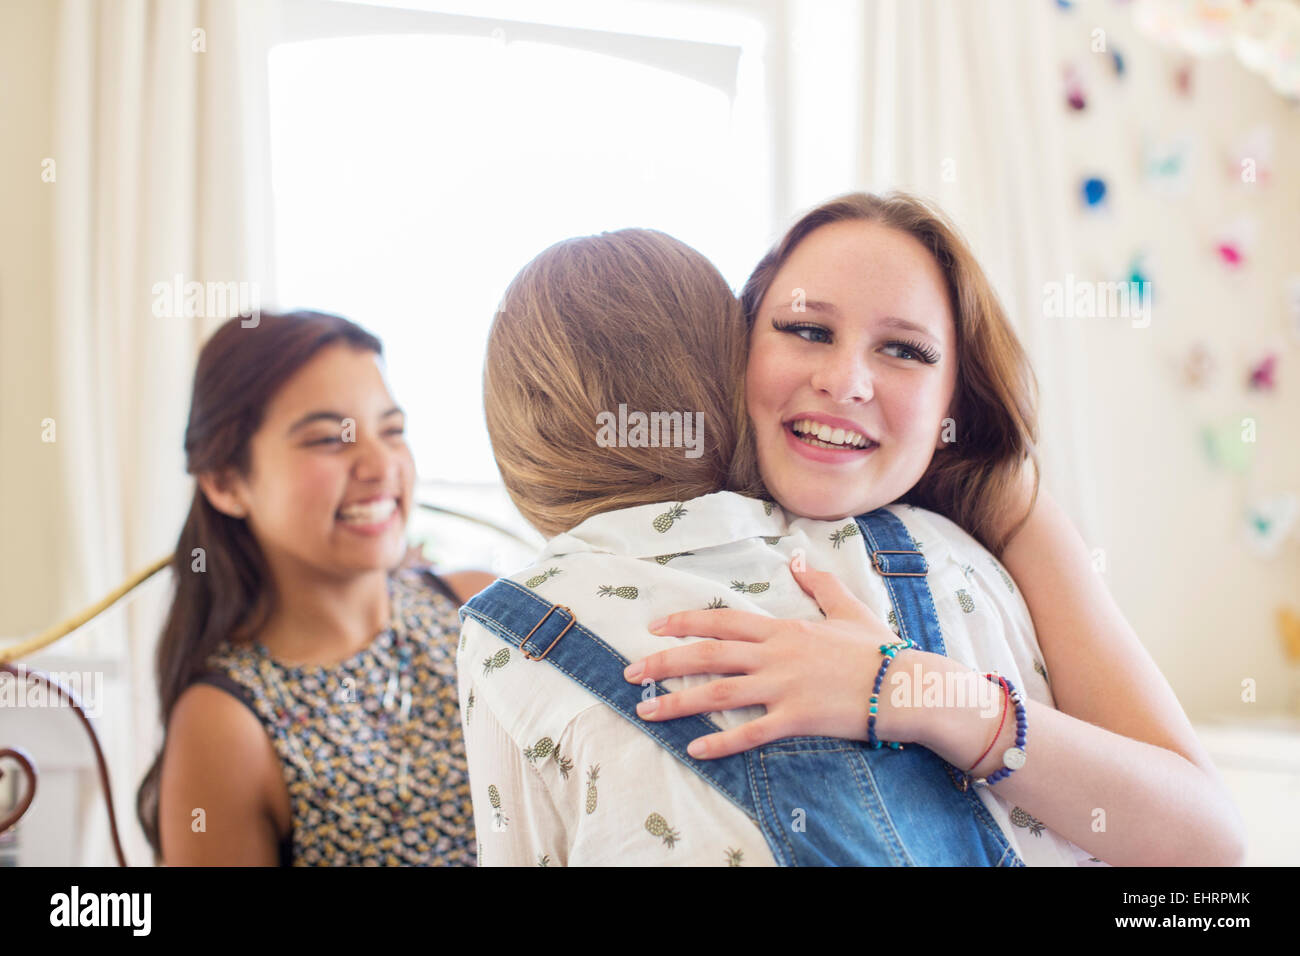 Three teenage girls embracing in bedroom Stock Photo